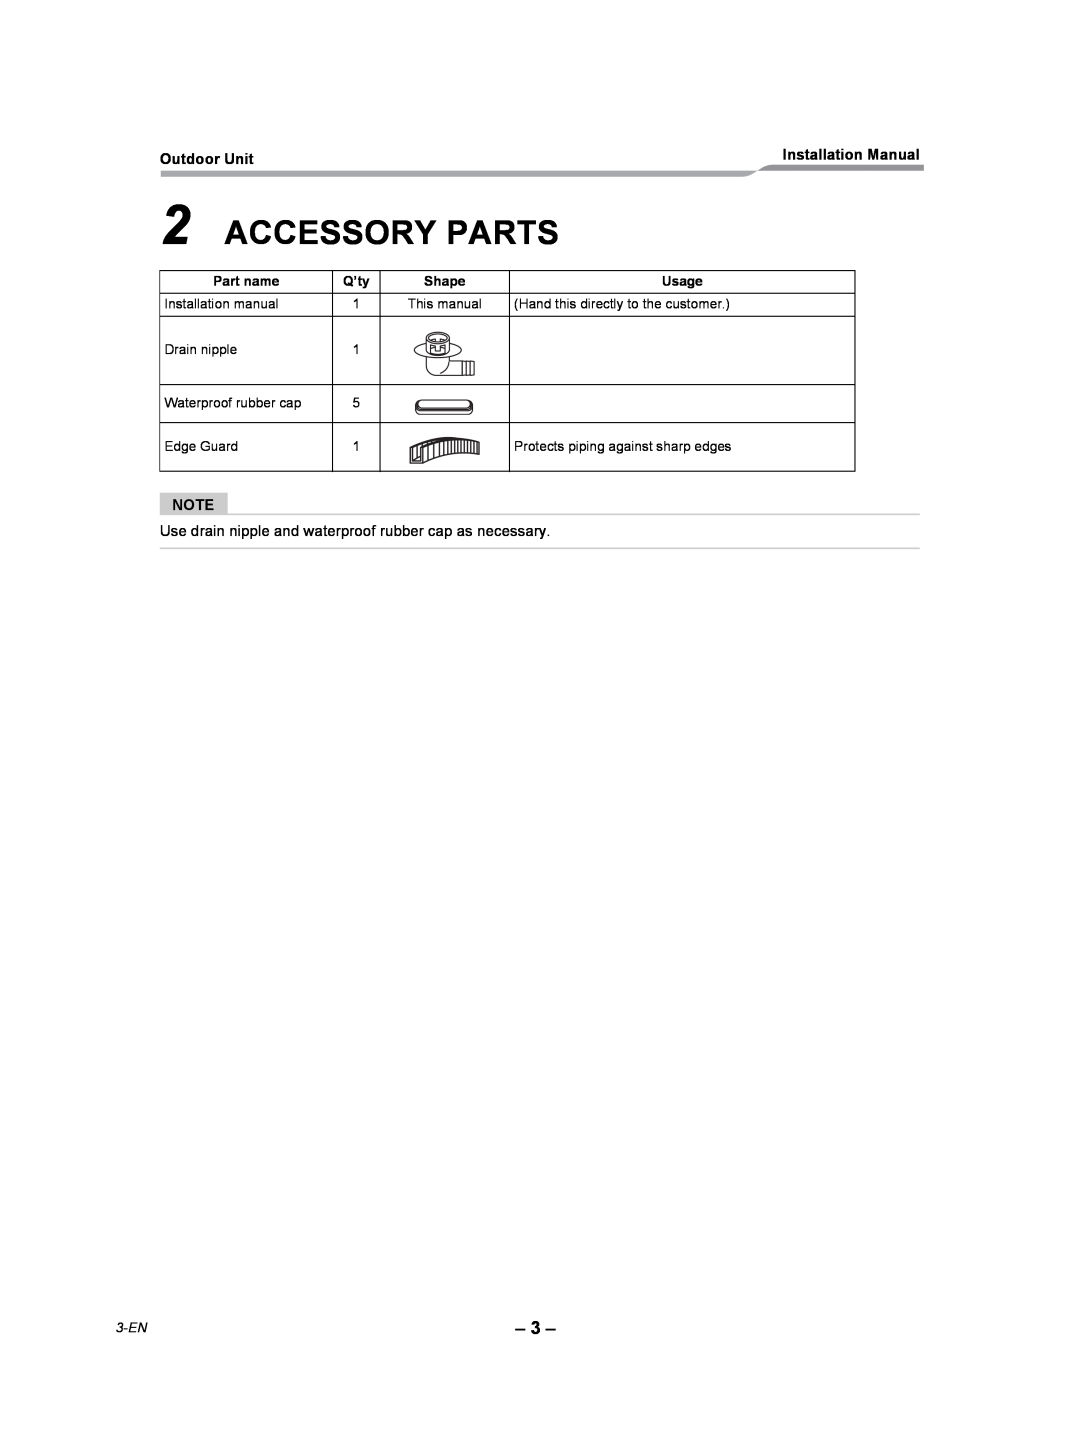 Toshiba RAV-SP300AT2-UL, RAV-SP360AT2-UL, RAV-SP420AT2-UL installation manual Accessory Parts, 3-EN 